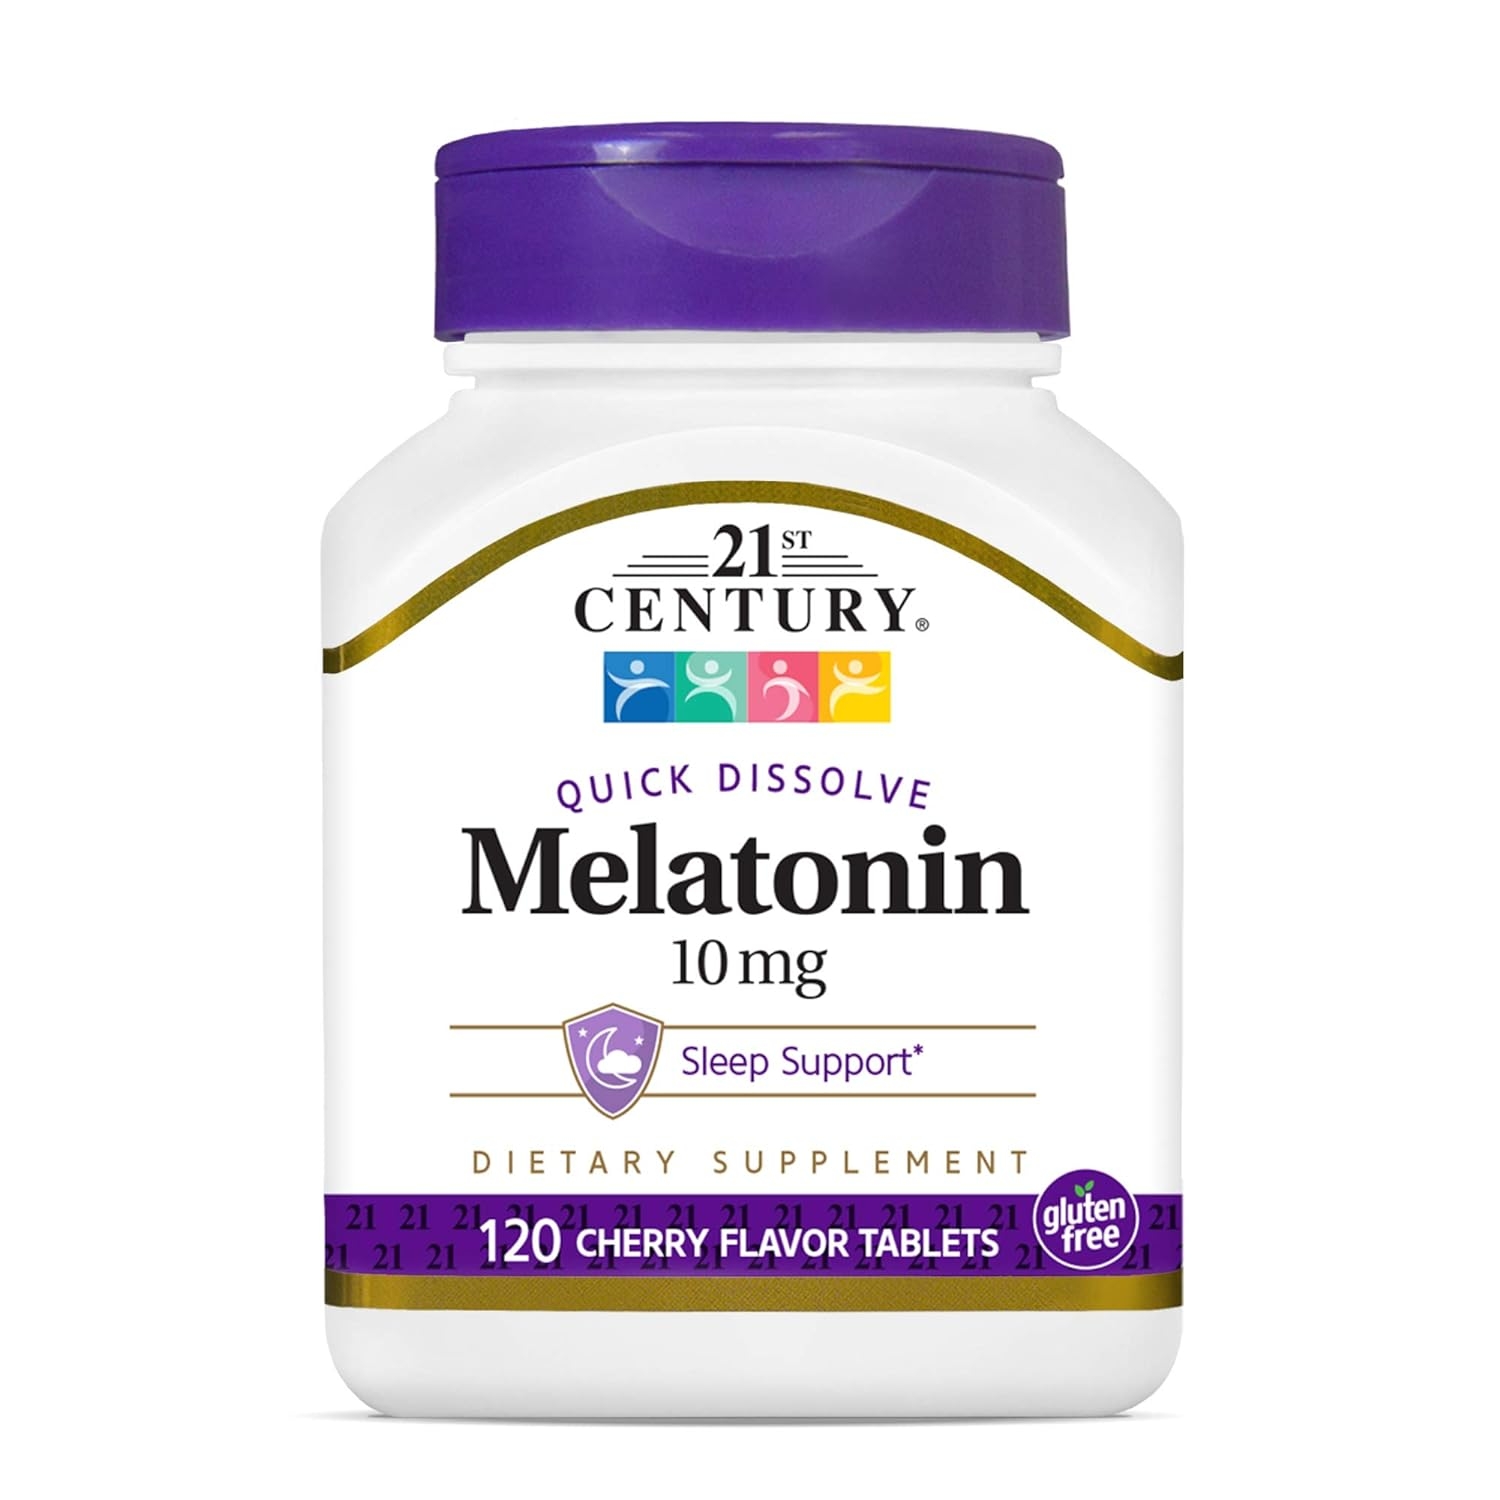 21st Century, Melatonin Quick Dissolve Tablets 10 mg, White, Cherry, 120 Count